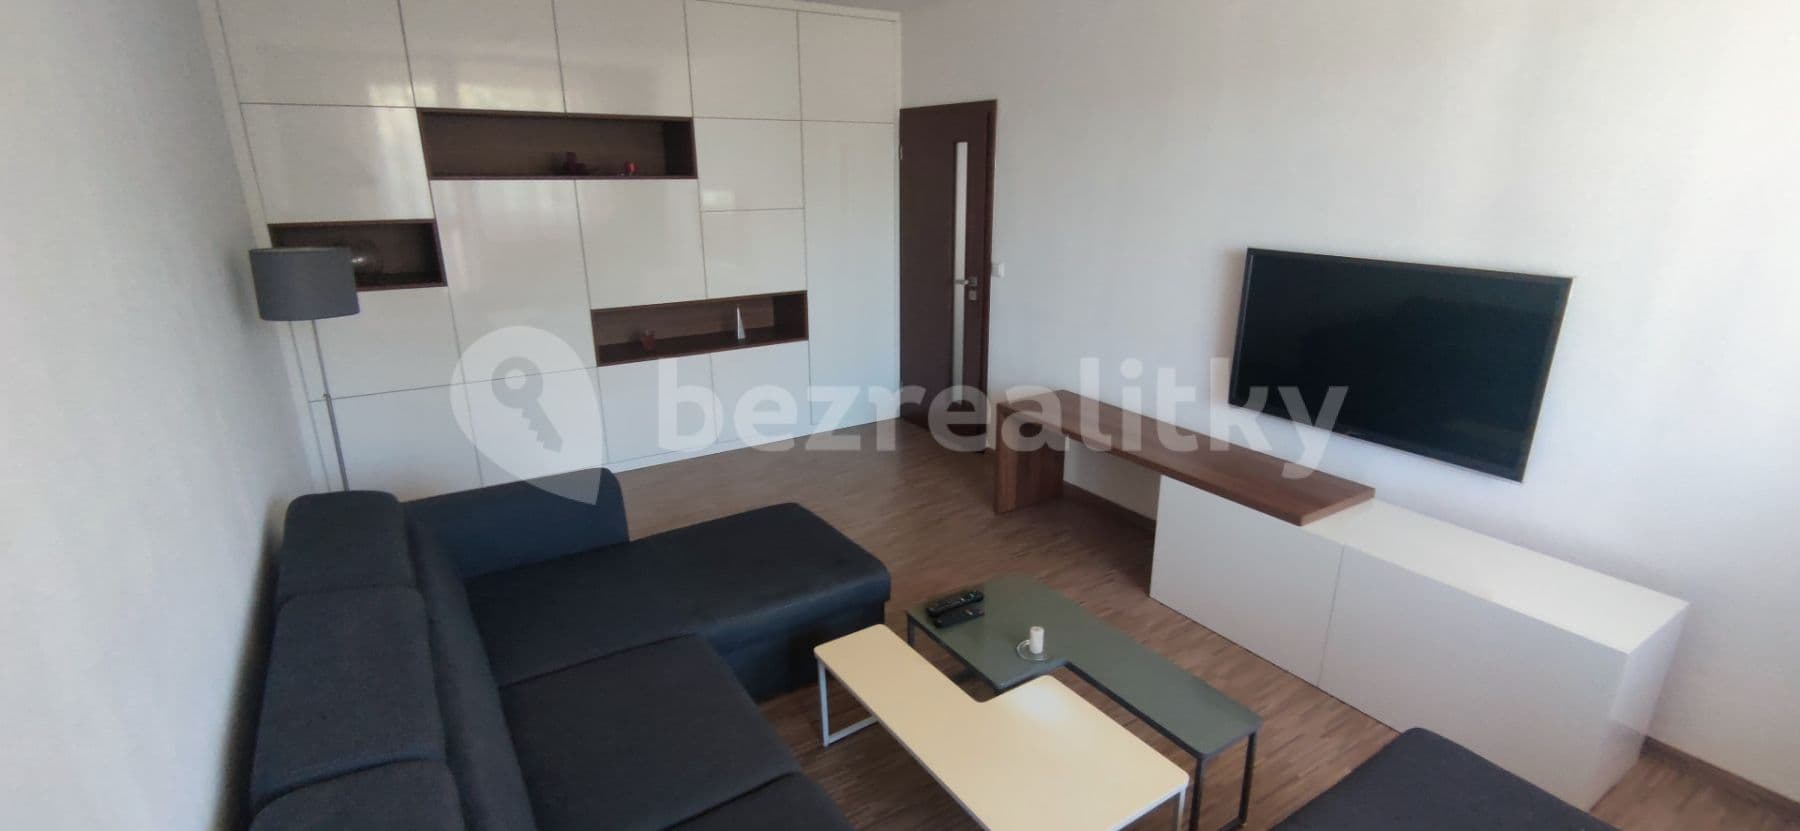 3 bedroom flat to rent, 84 m², Okružní, Blansko, Jihomoravský Region